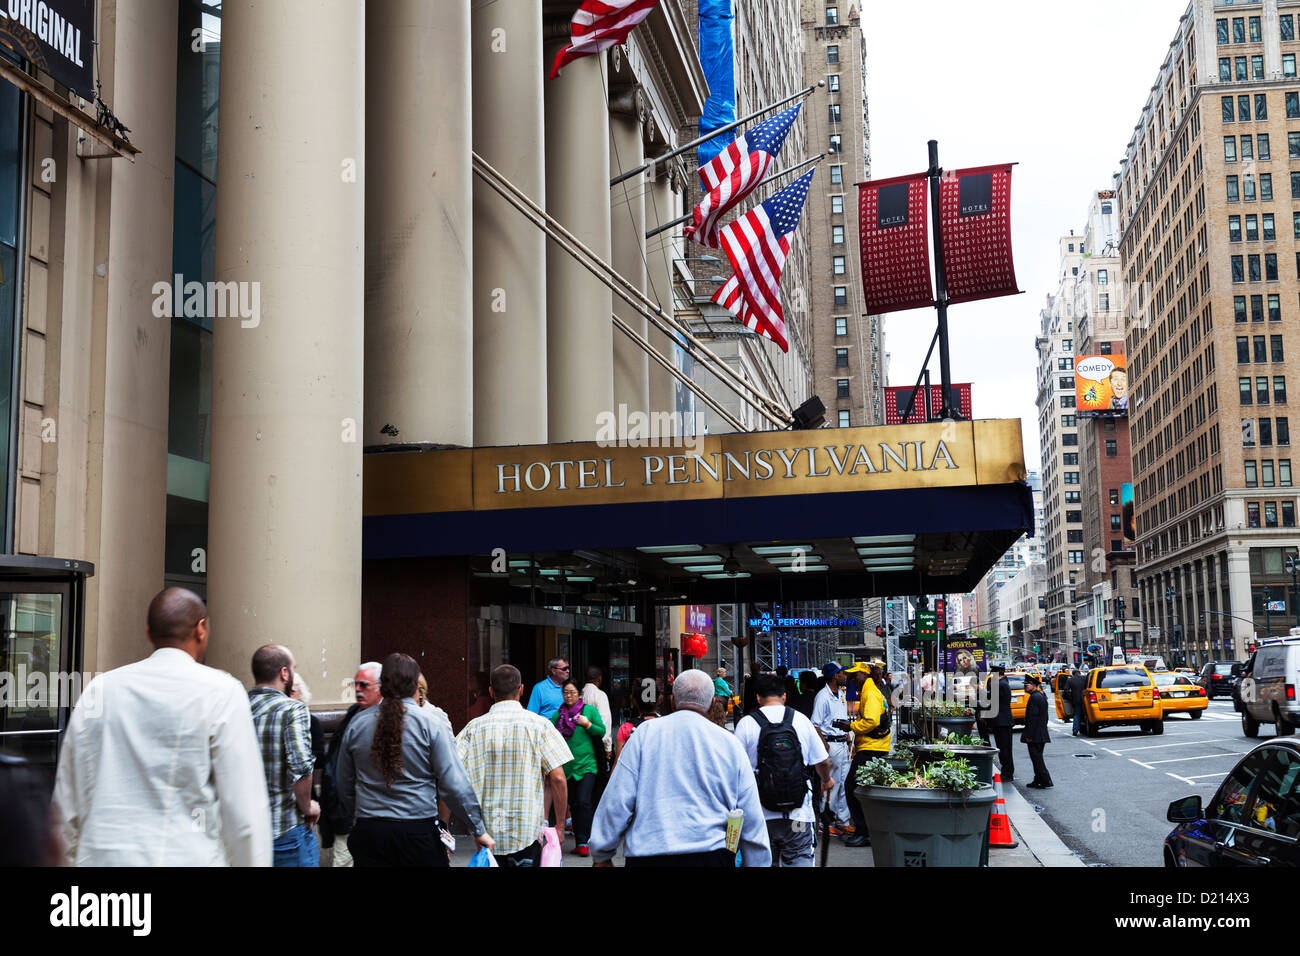 Hotel Pennsylvania, New York City, NYC, NY, USA, America outside exterior of building on street Stock Photo